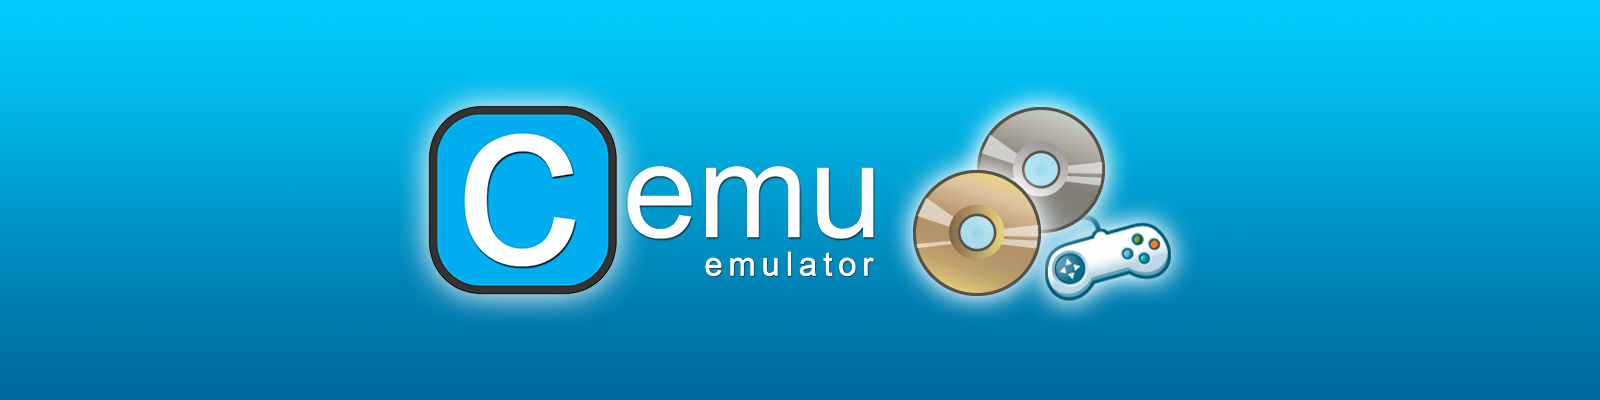 mac 3ds emulator dump